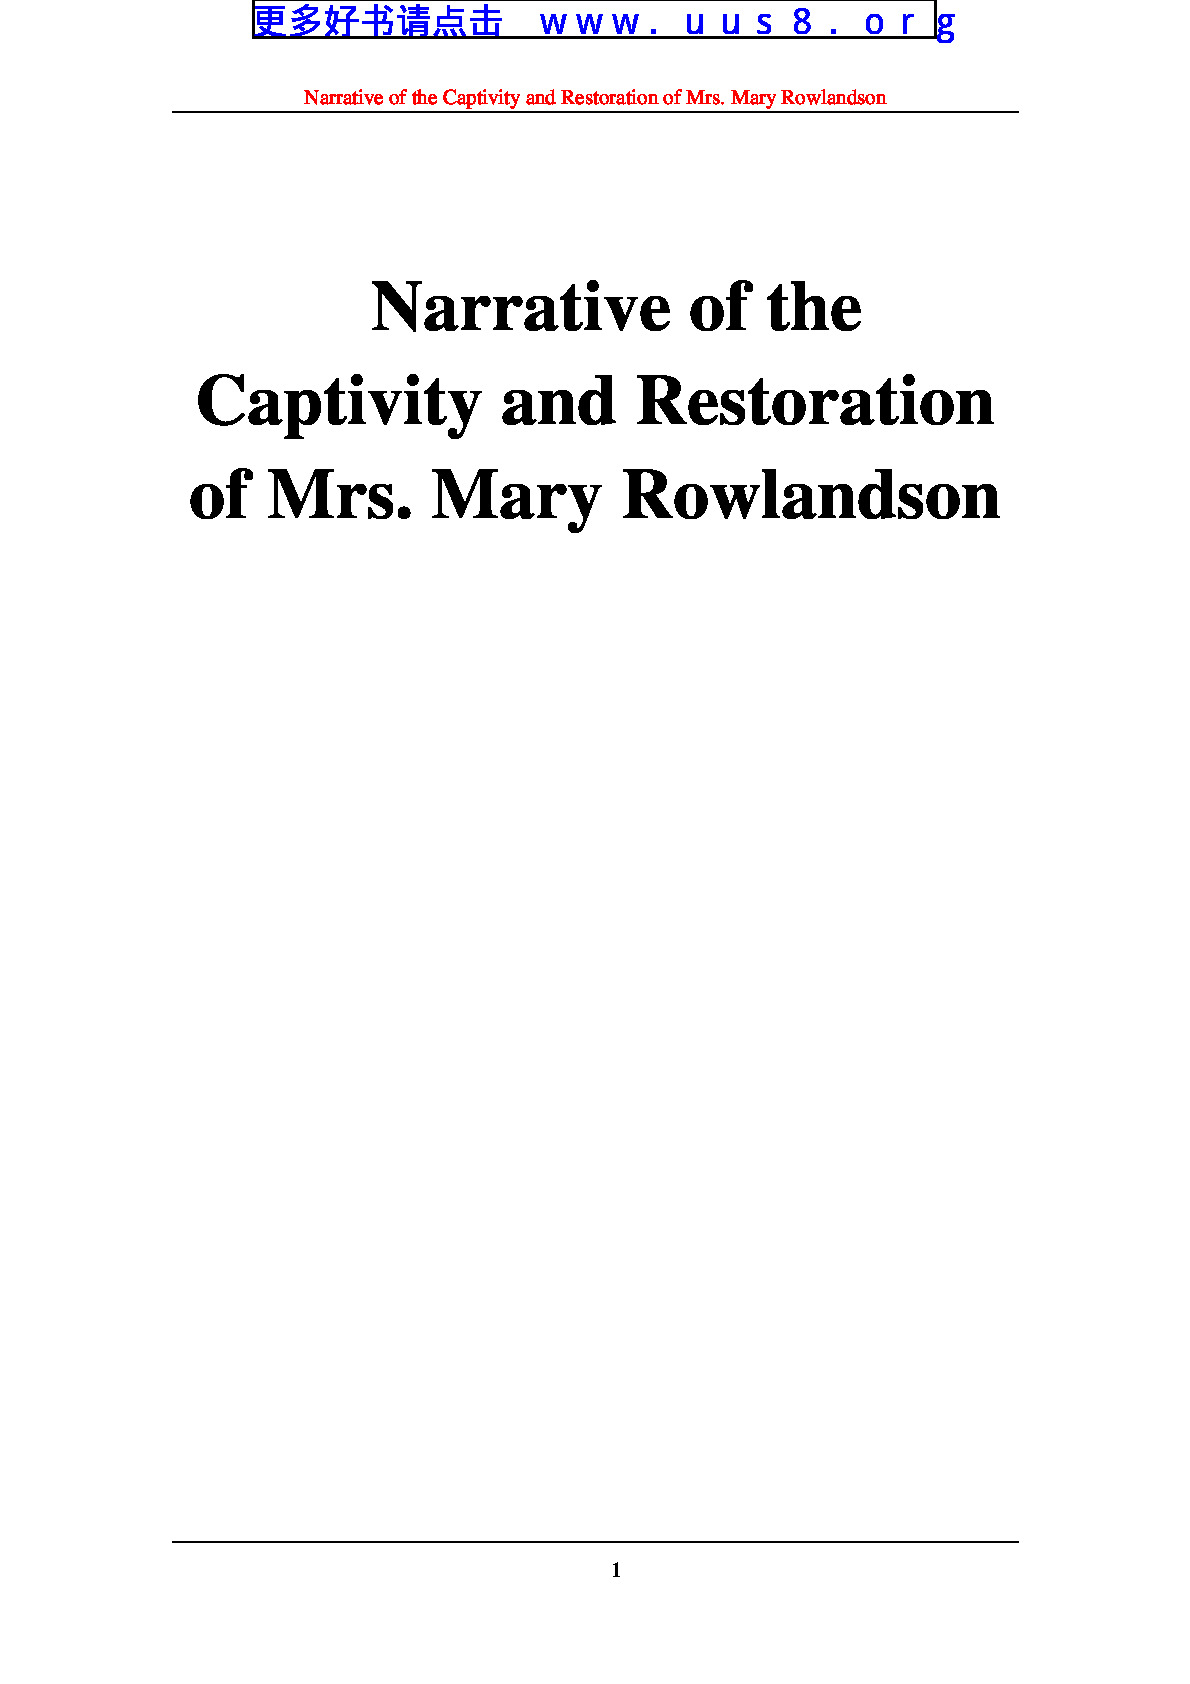 Narrative_of_the_Captivity_and_Restoration_of_Mrs